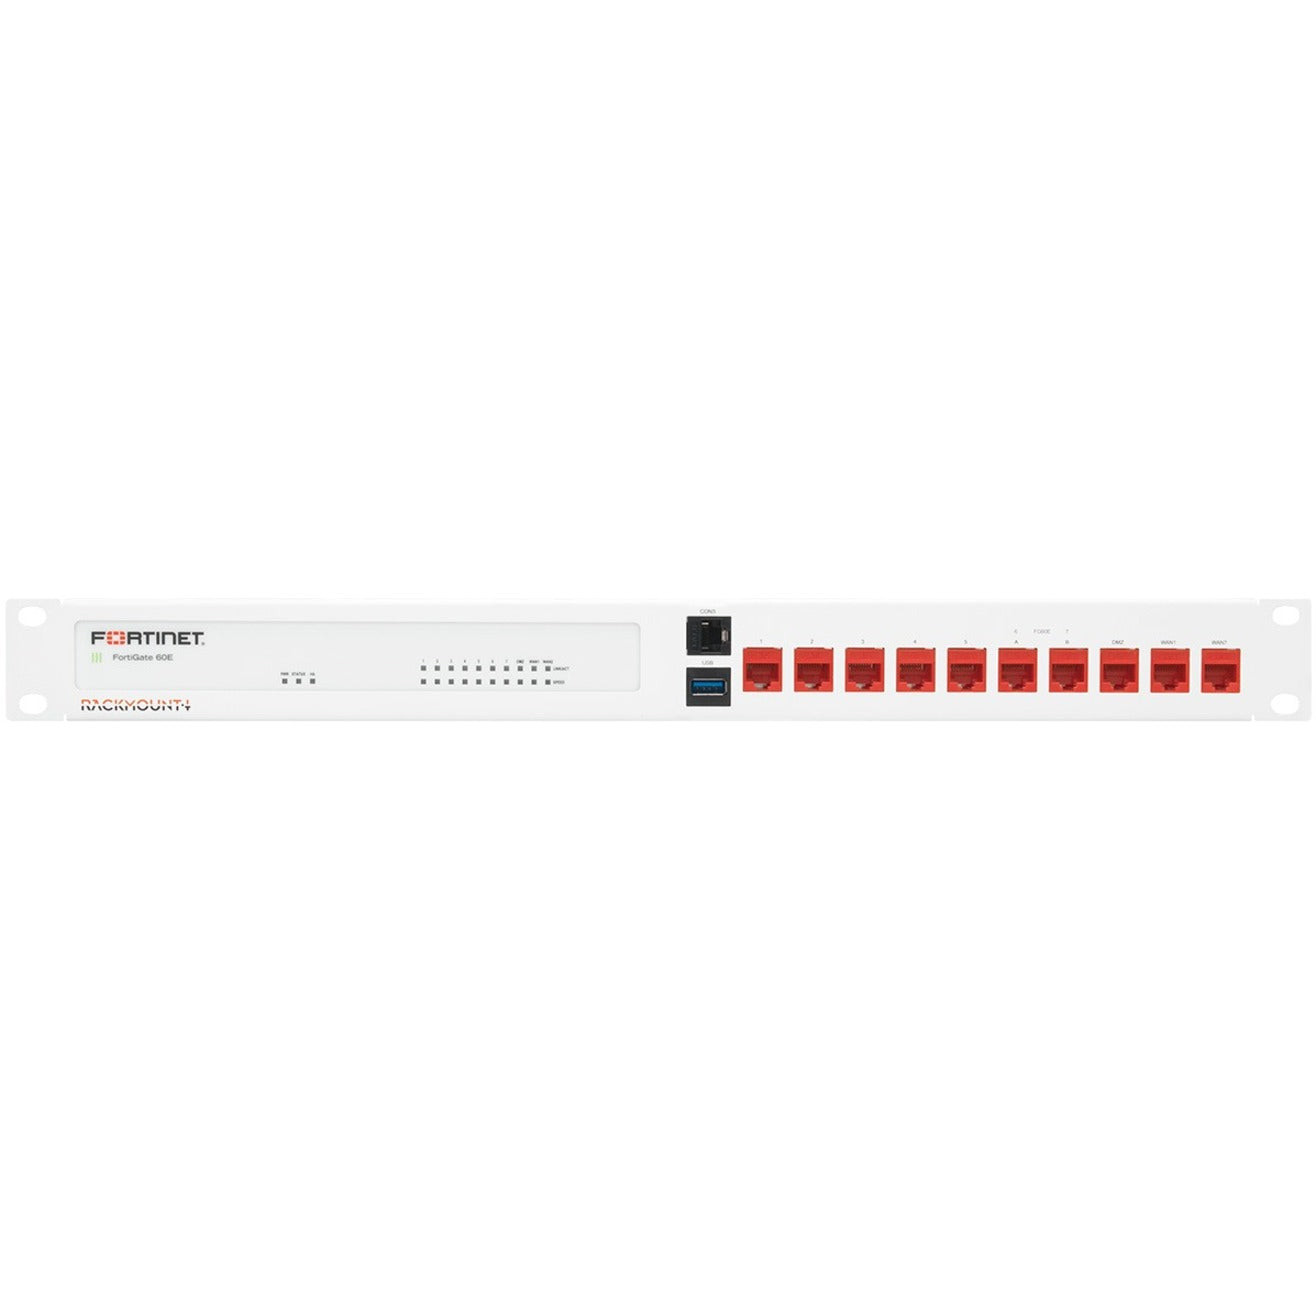 RACKMOUNT.IT RM-FR-T10 Rack Shelf, Compatible with FortiGate Firewalls, 1U Height, Signal White